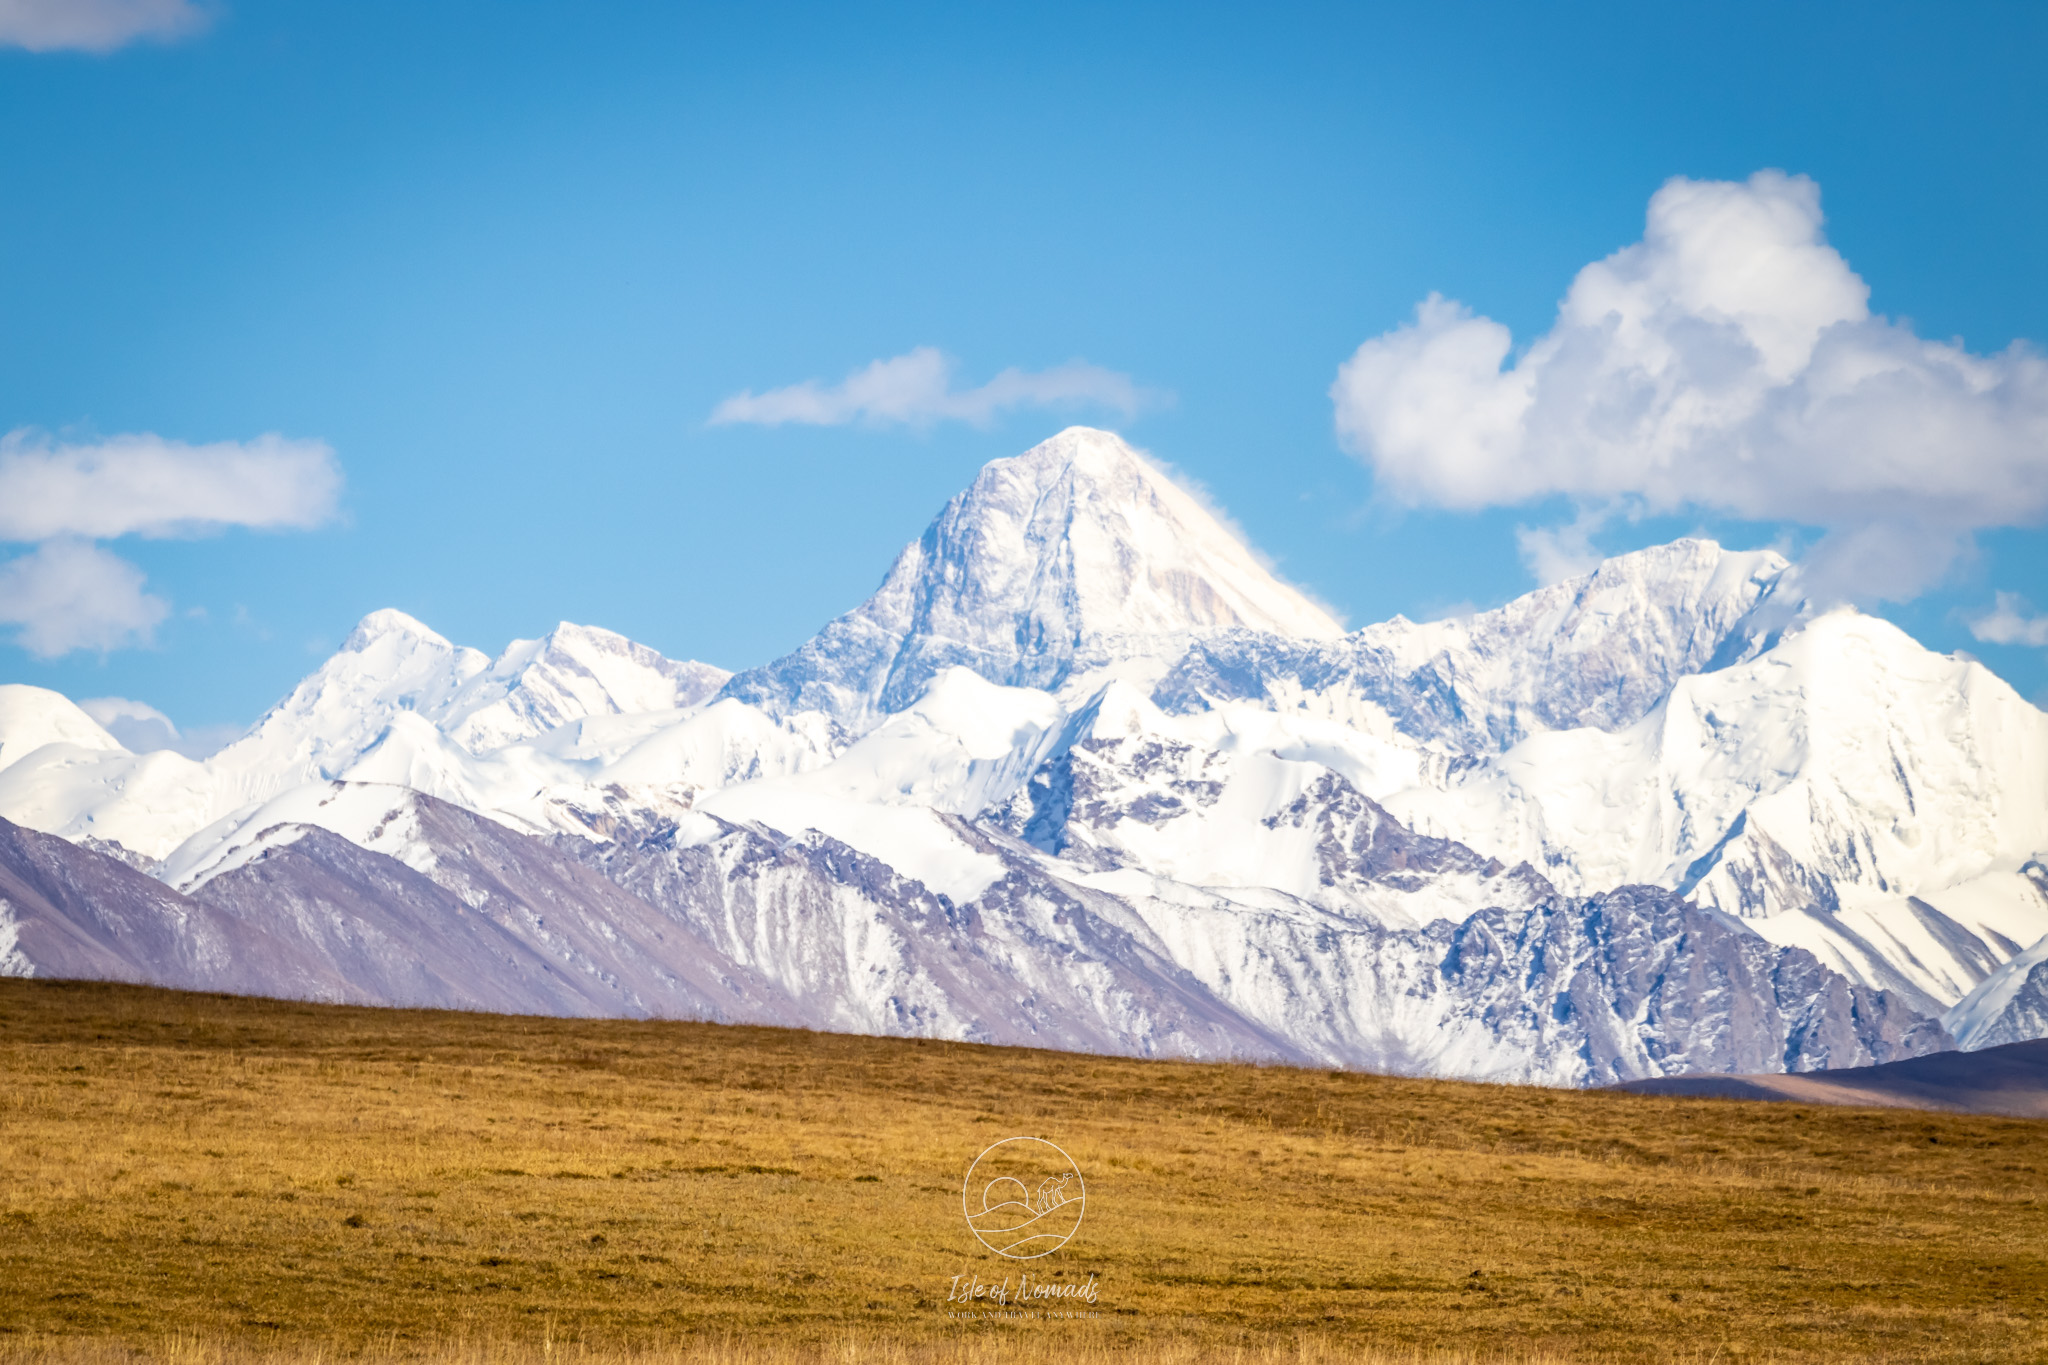 A view of the 7000m high Khan Tengri